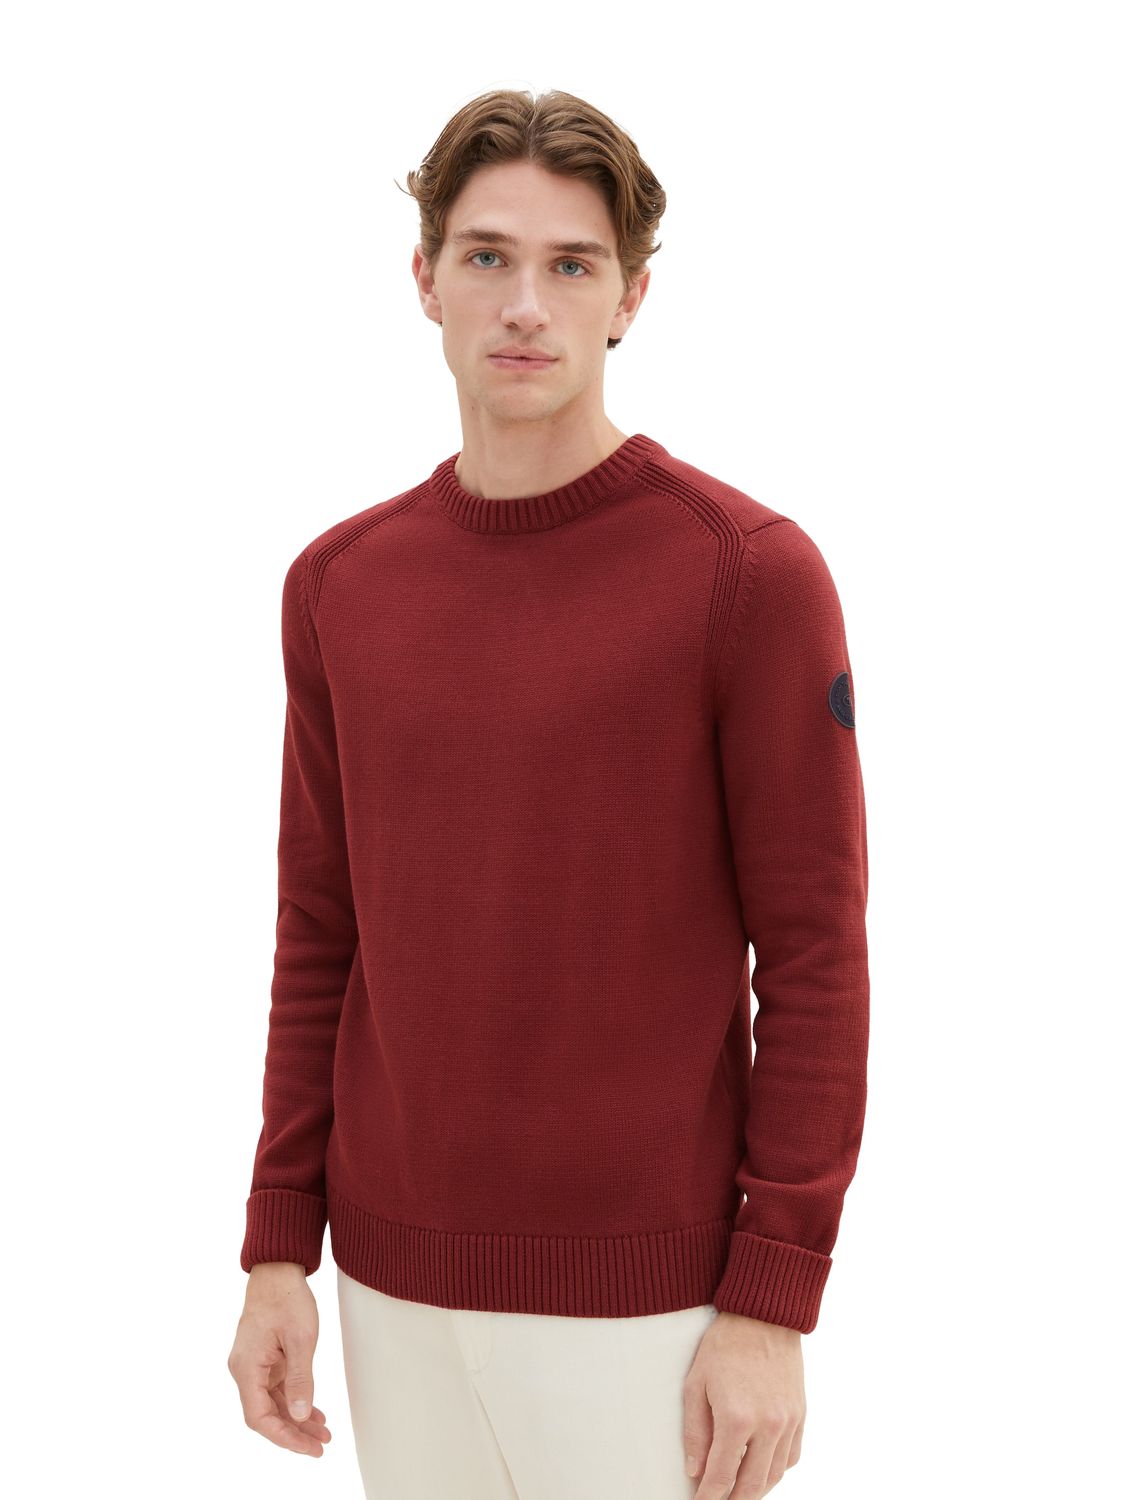 Пуловер Tom Tailor CREWNECK KNIT, красный пуловер tom tailor strick красный